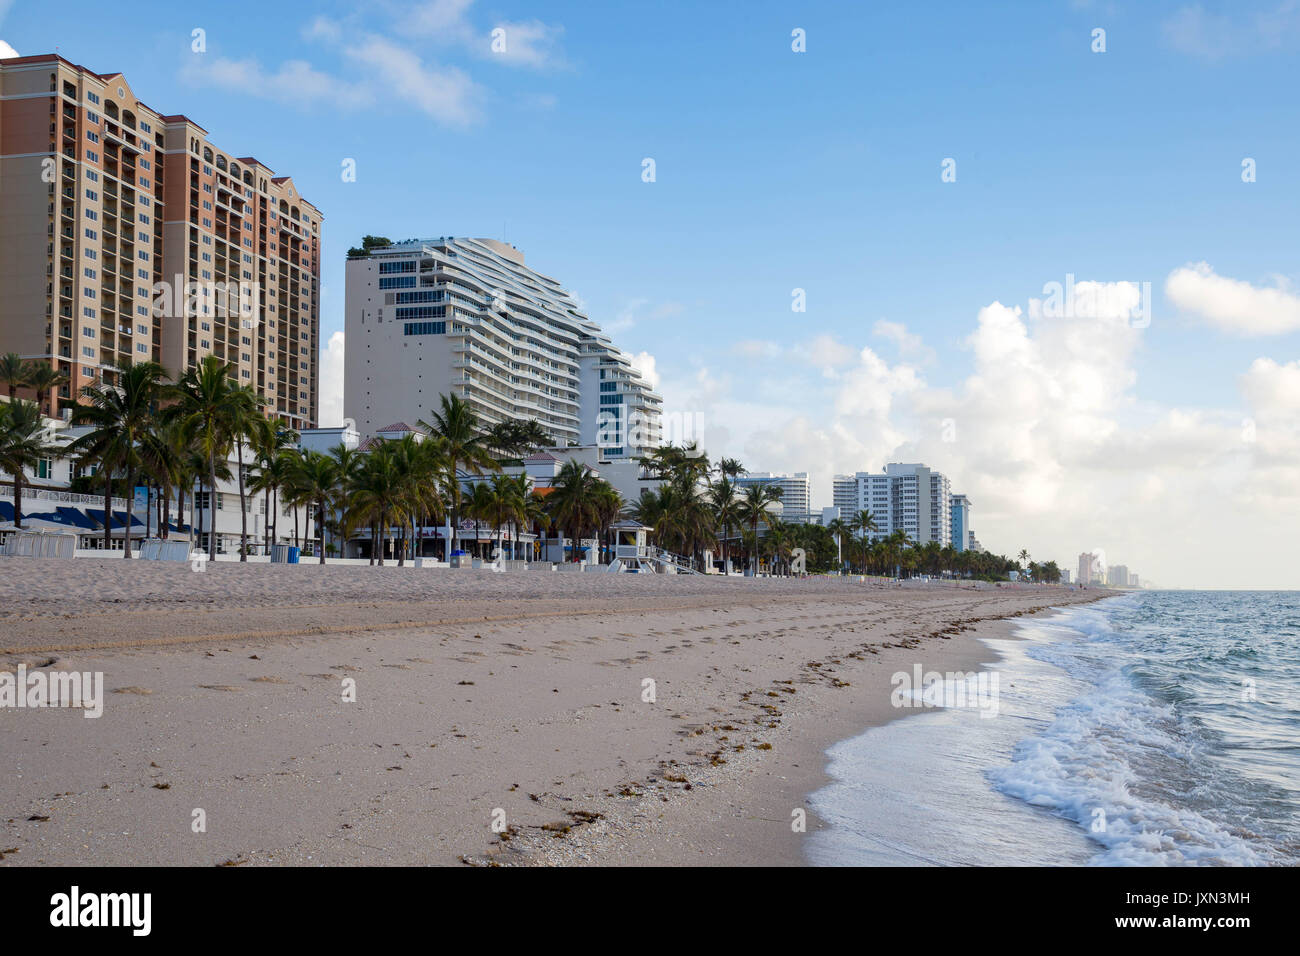 Beachfront Hotels at Las Olas in Ft. Lauderdale, FL. Stock Photo